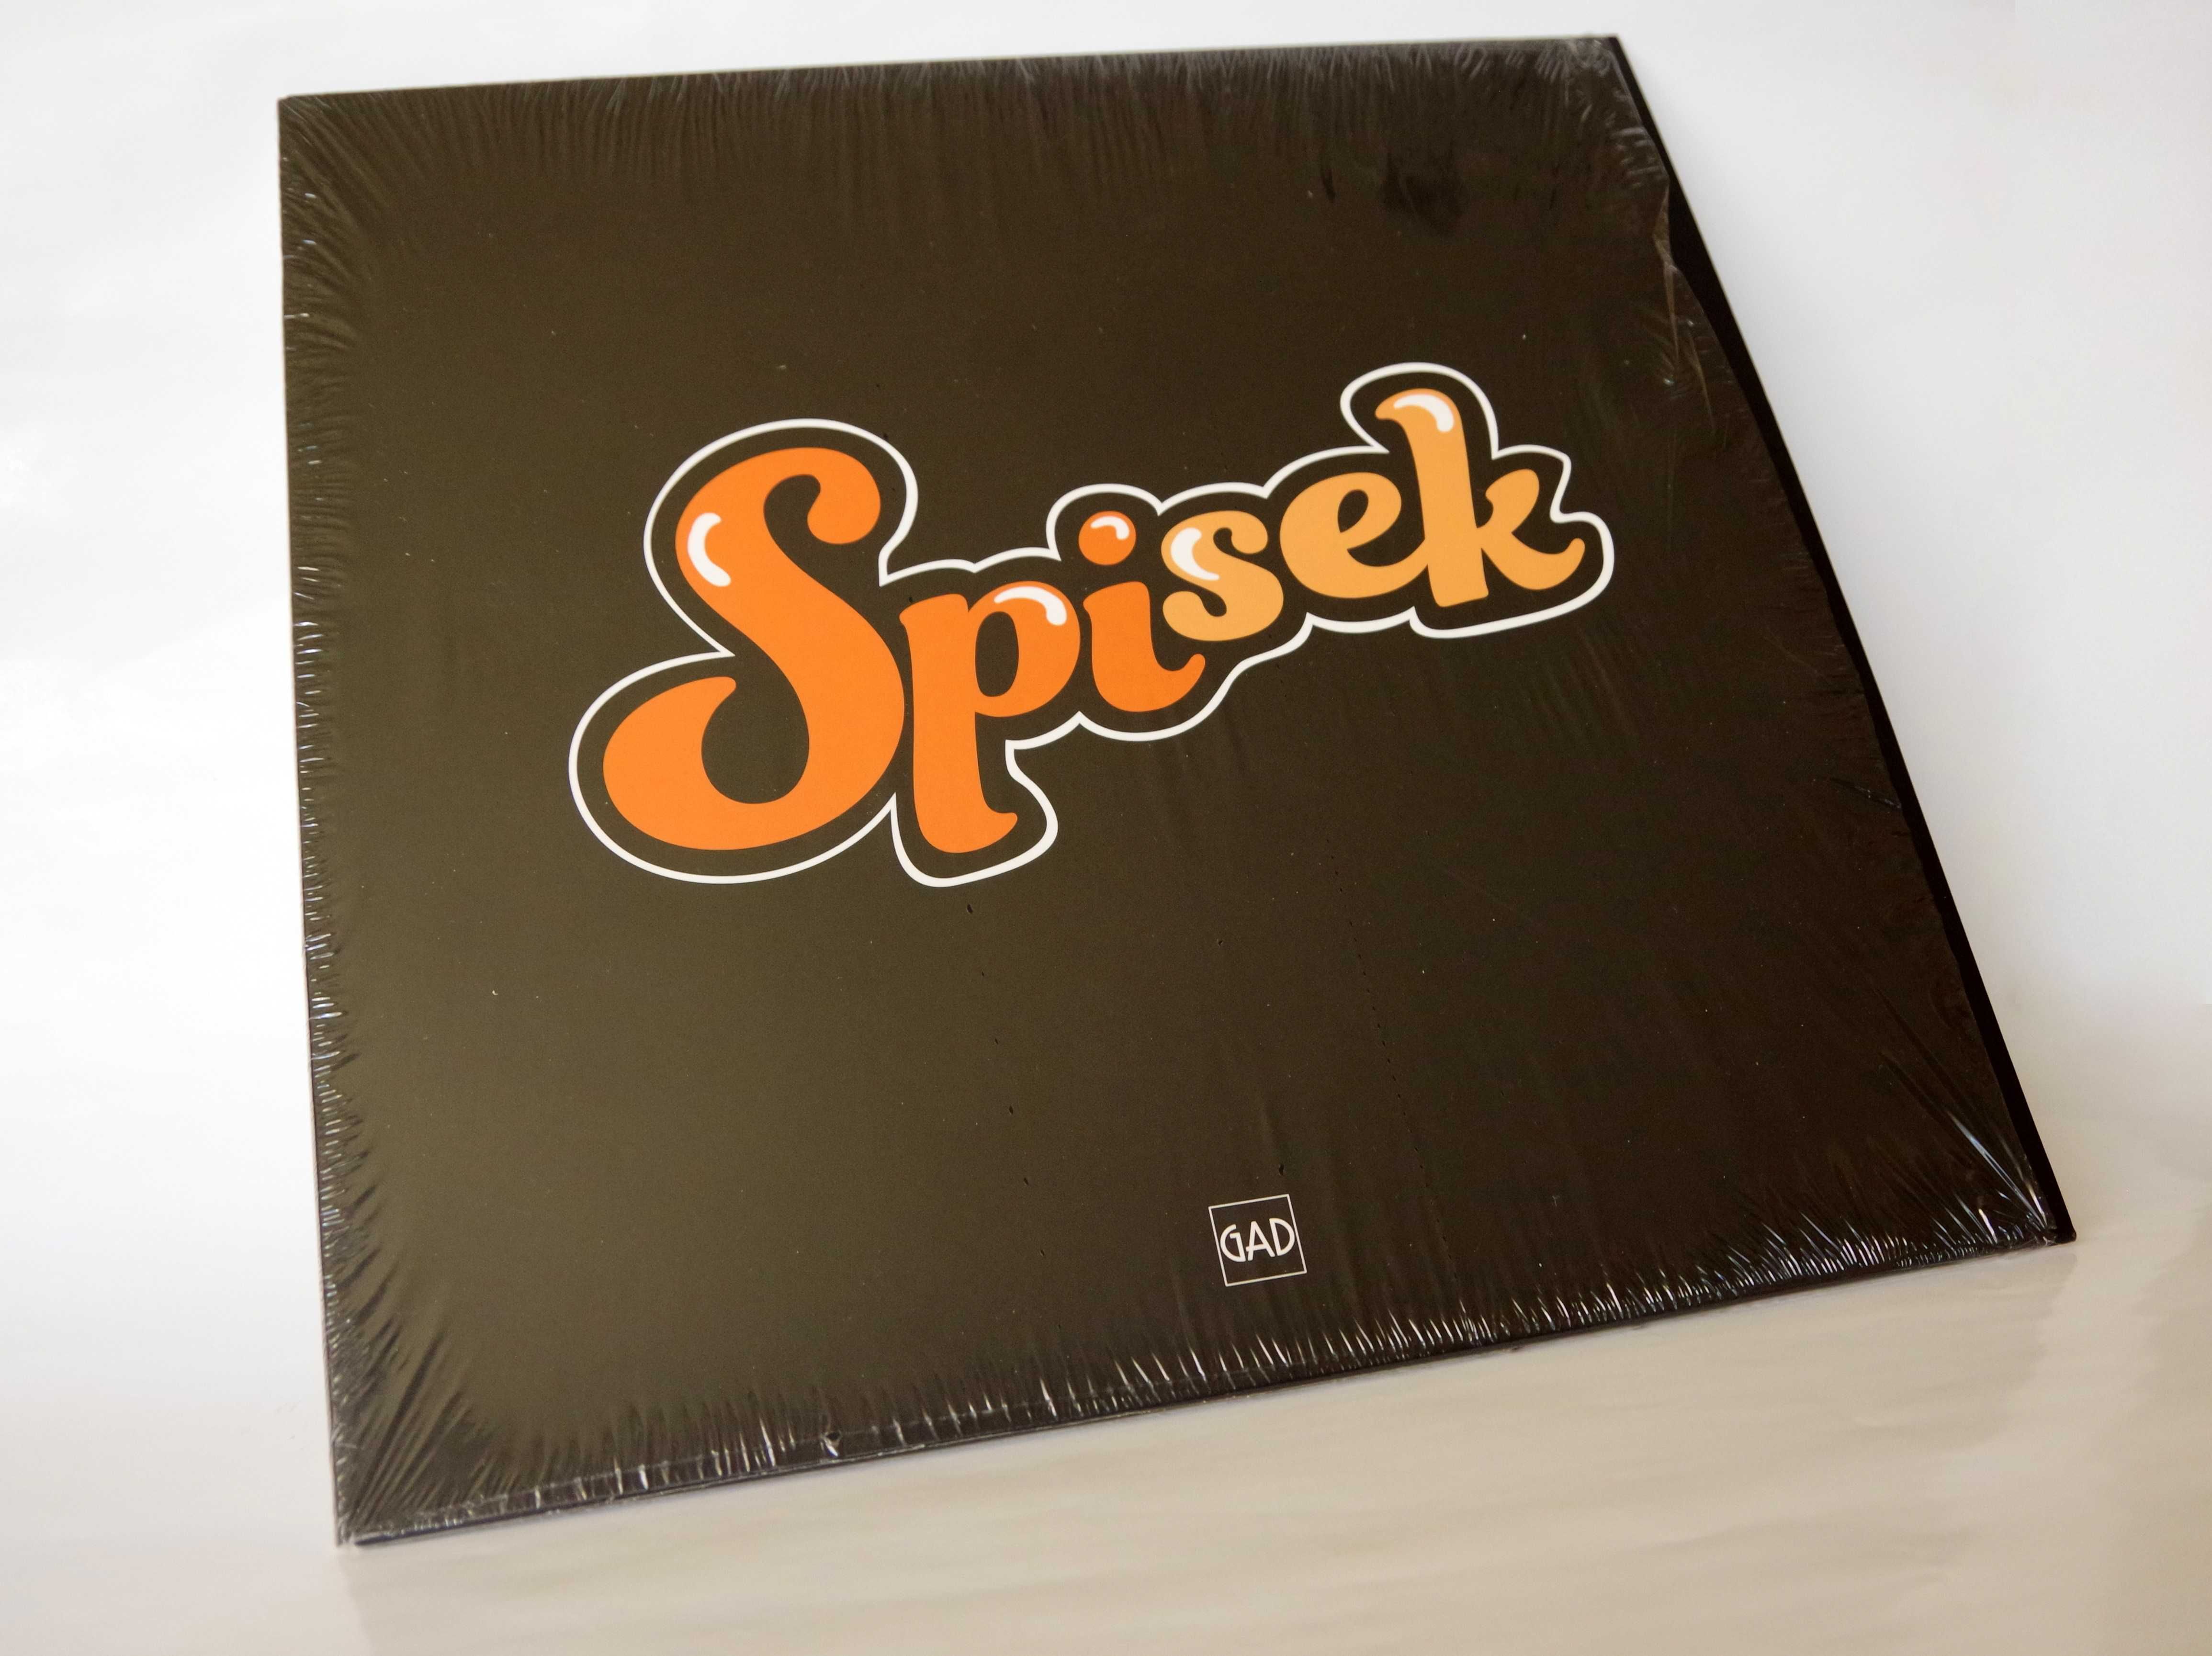 Spisek - LP 180g - GAD Records 2018